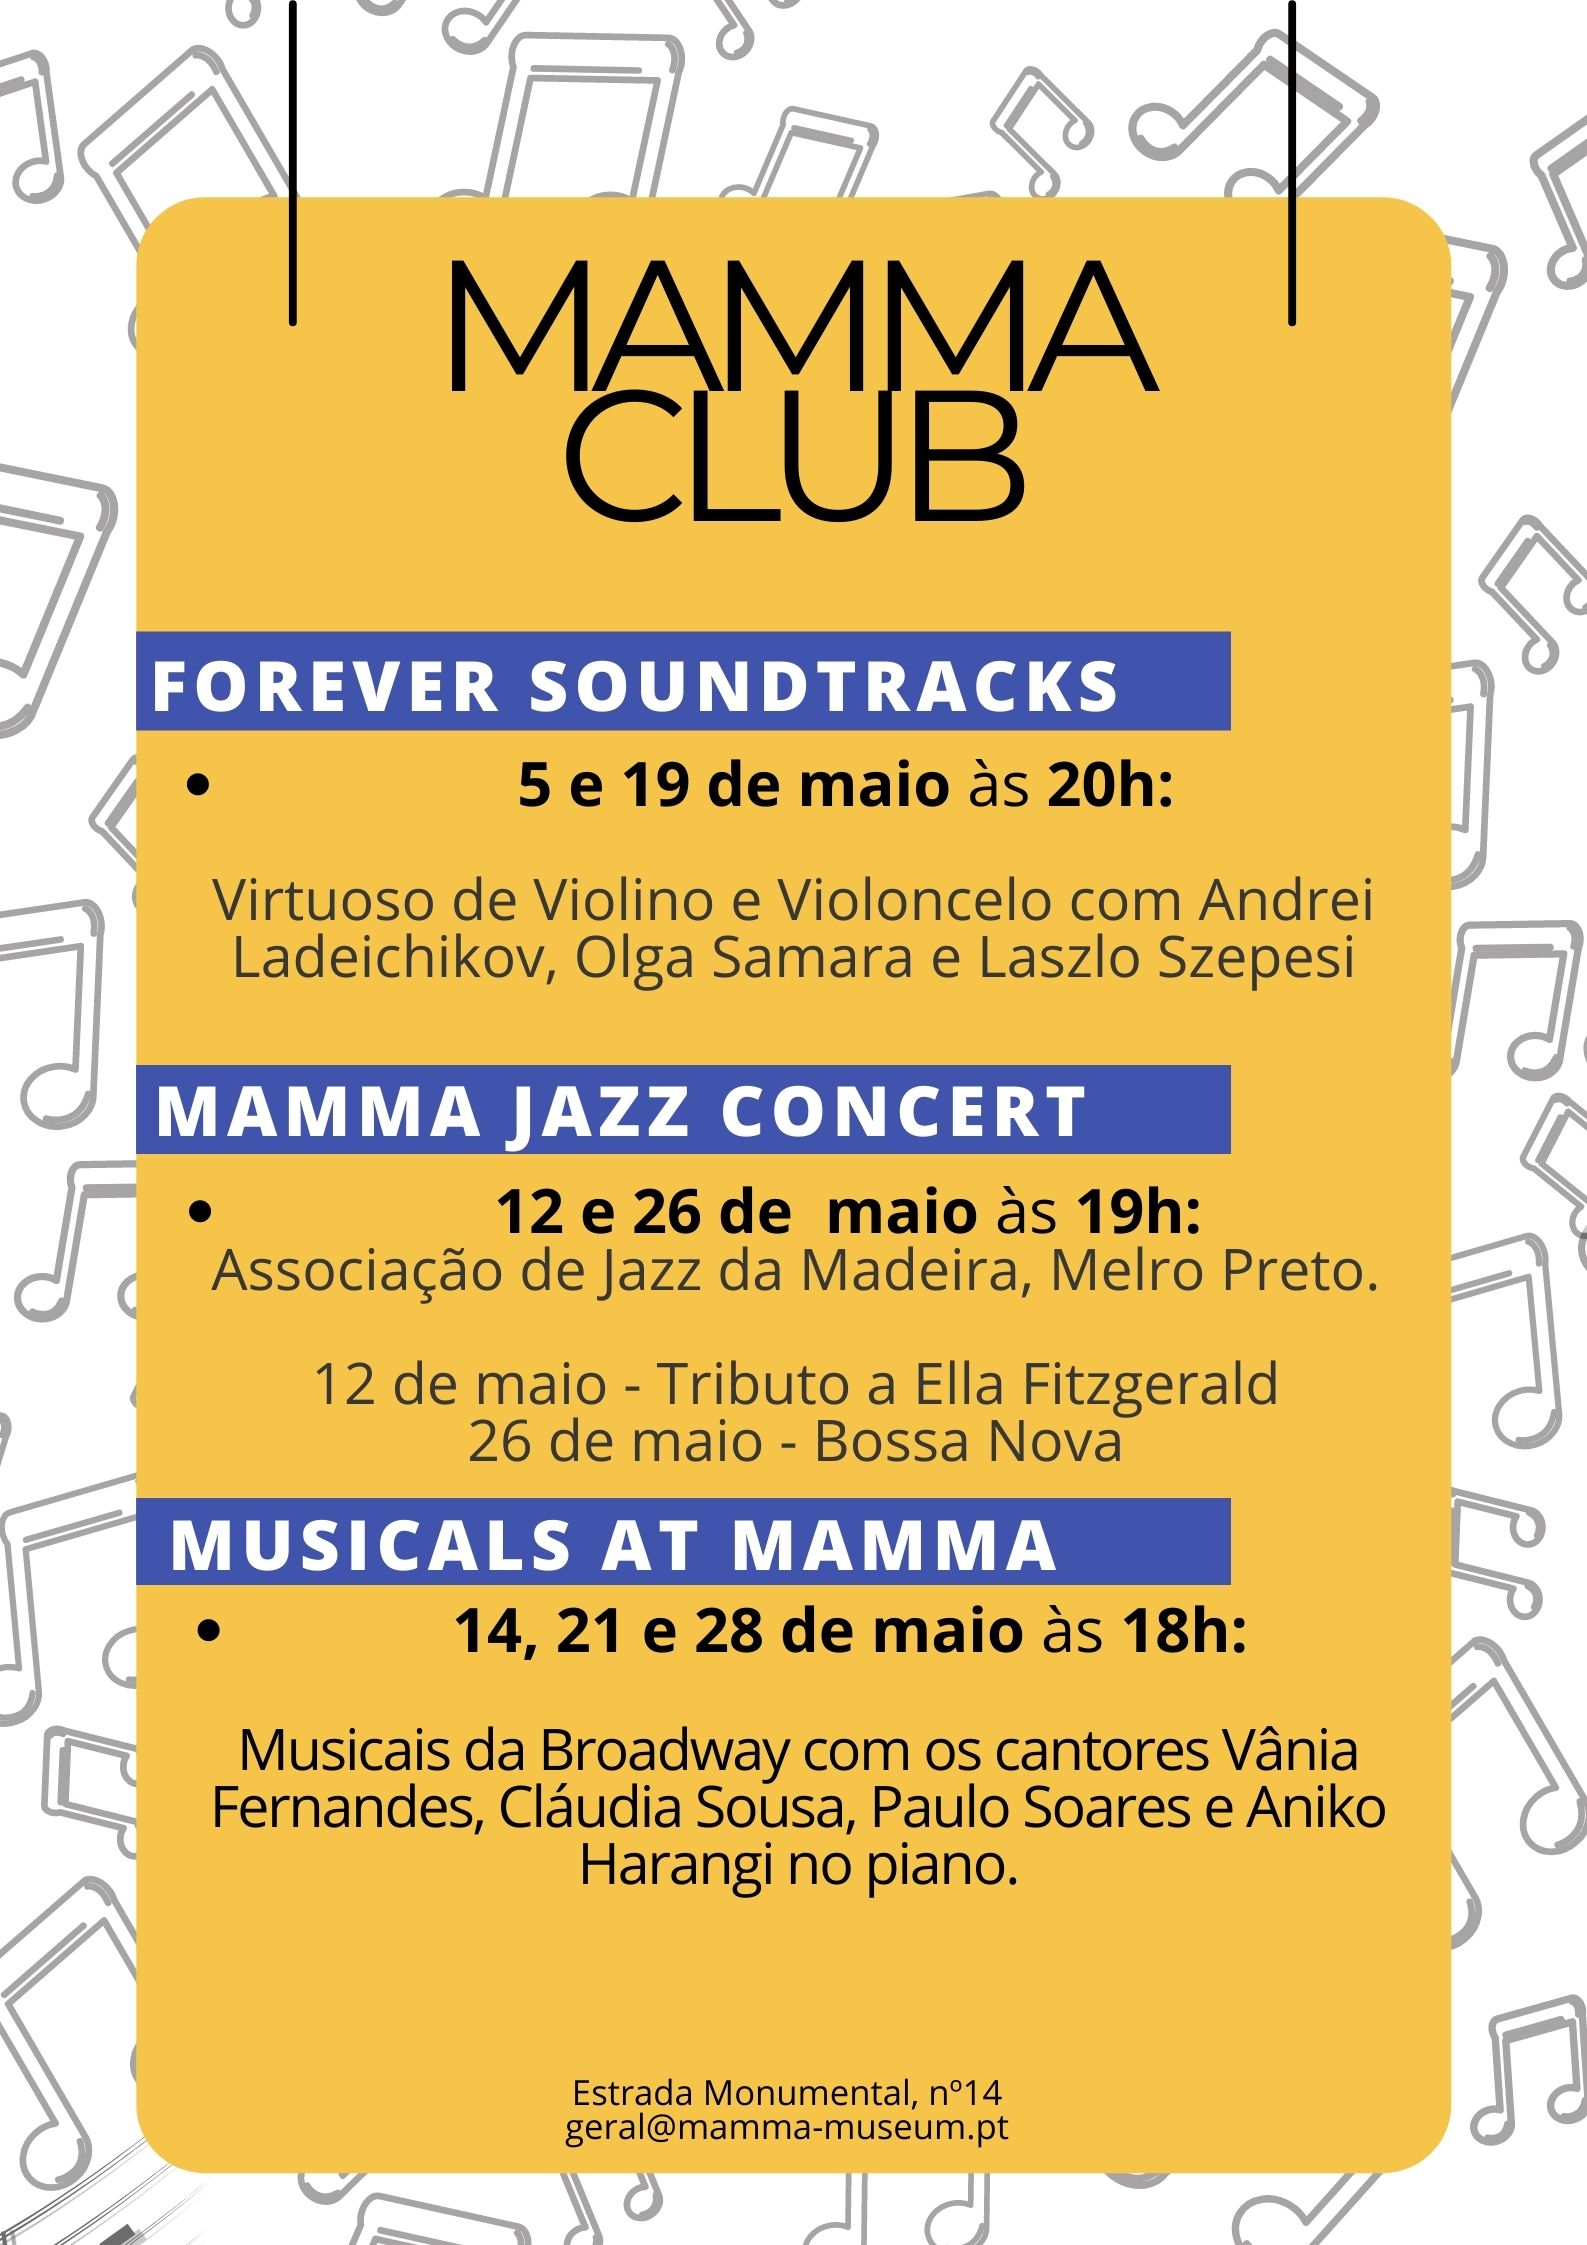 Cultura Madeira - Mamma Club